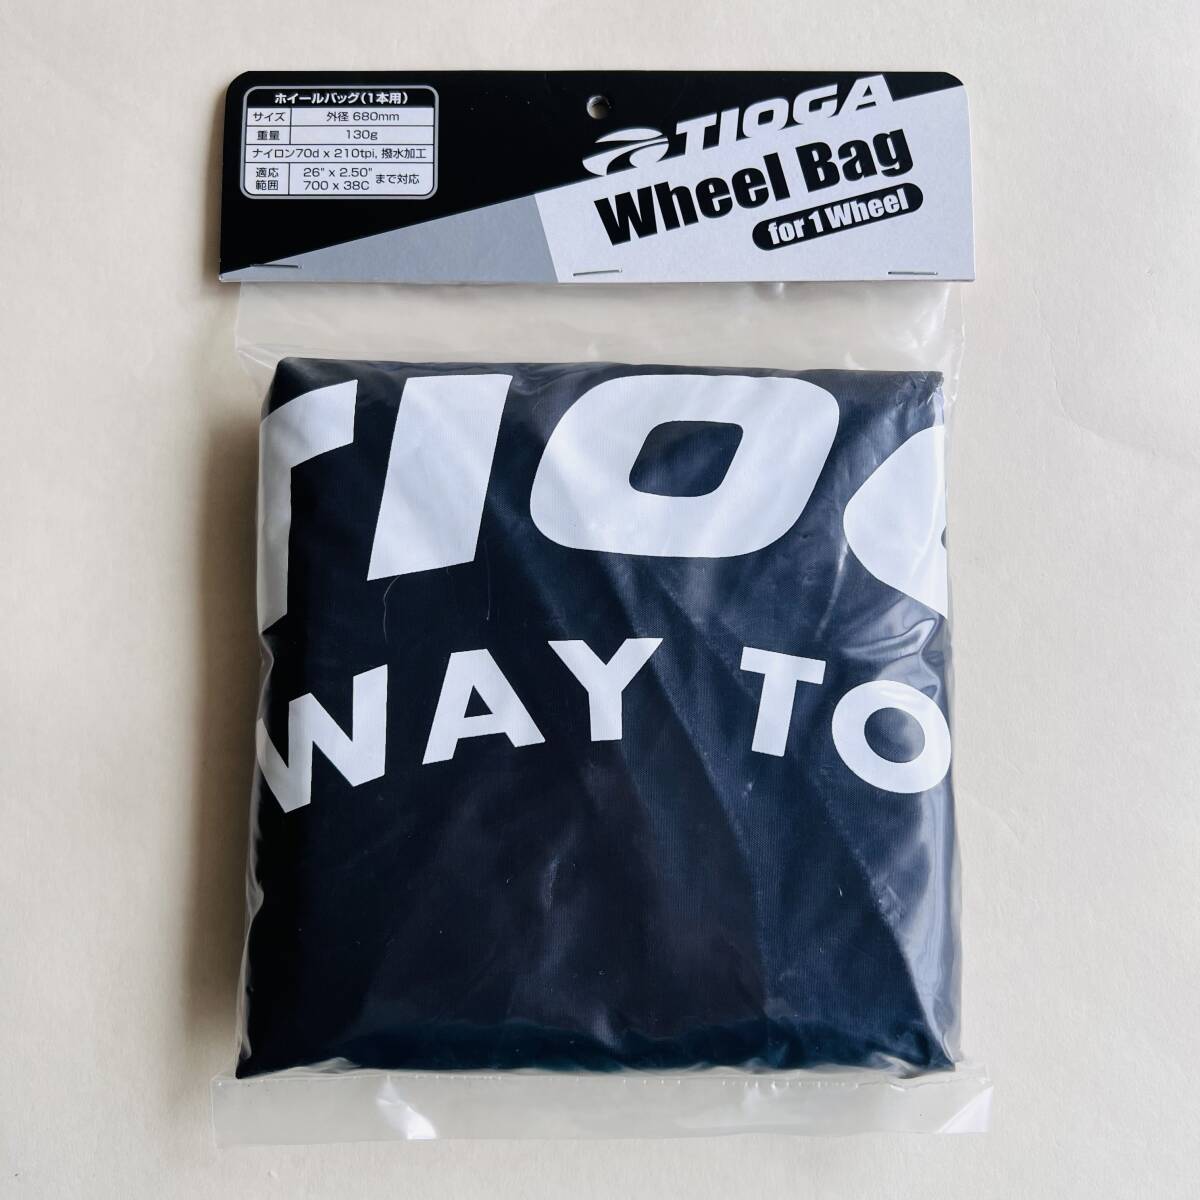 [ new goods ]TIOGA ( Tioga ) wheel bag 1 pcs for light weight free shipping 